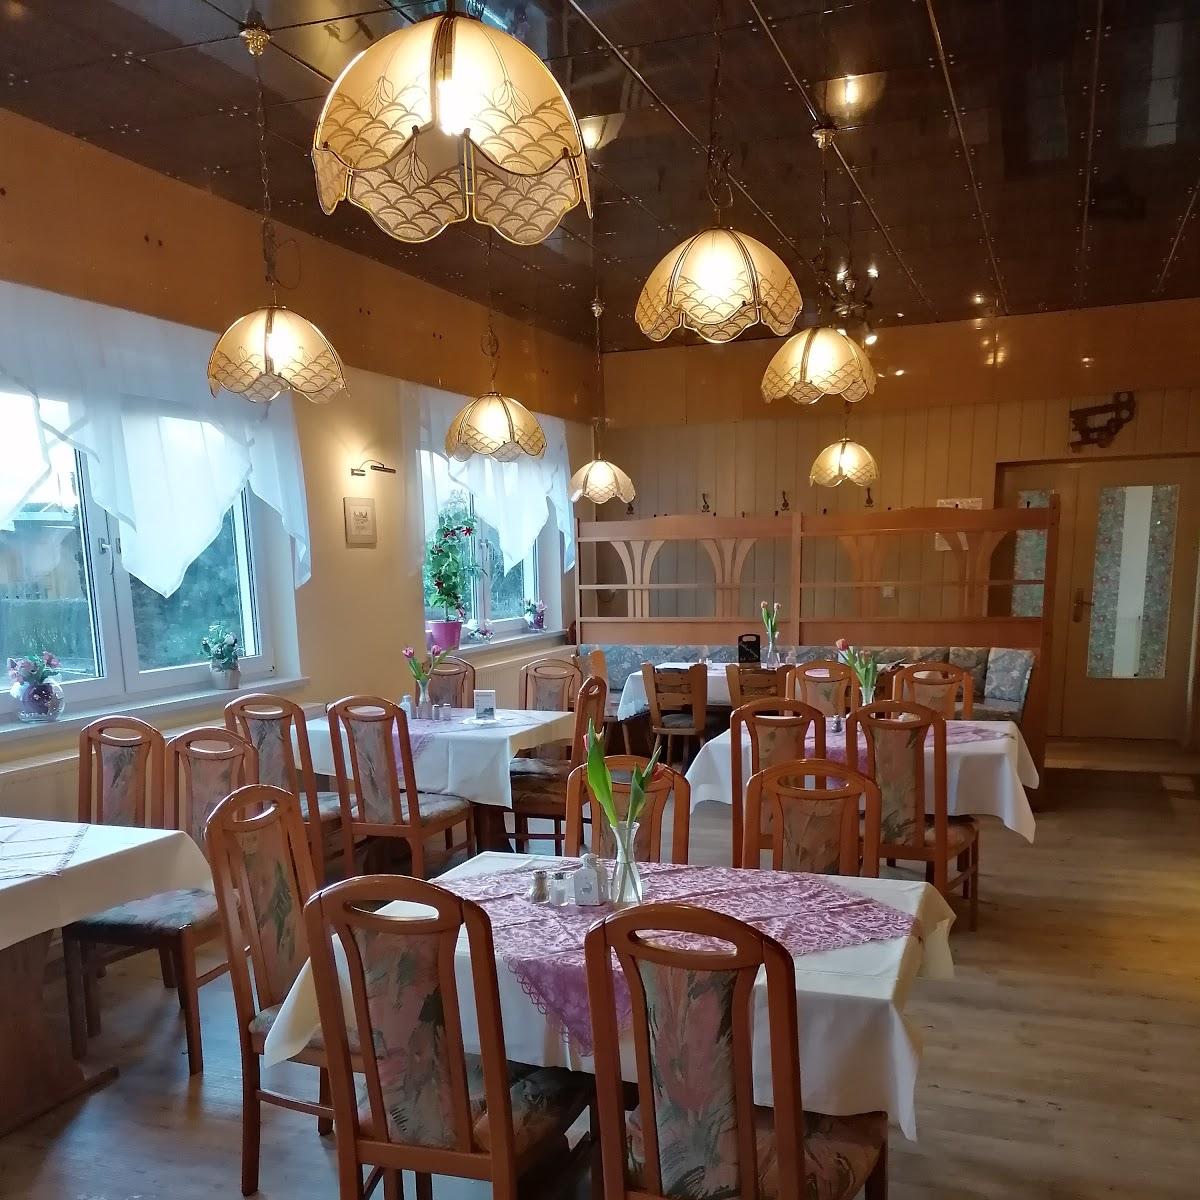 Restaurant "Gaststätte Erholung" in Bad Dürrenberg